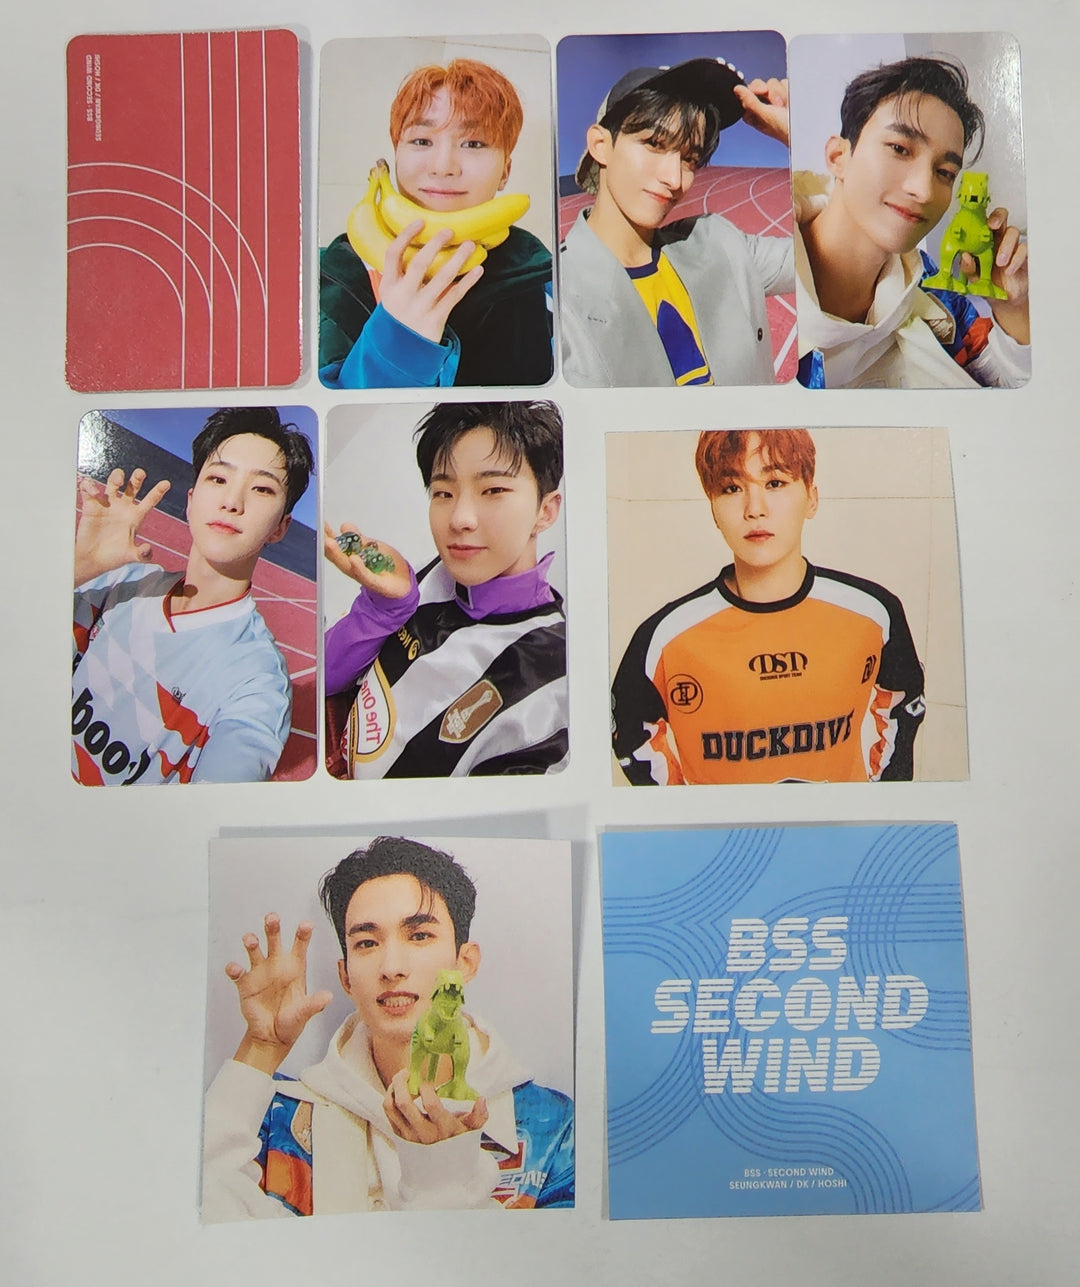 BSS (Of SEVENTEEN) 'SECOND WIND' 1st Single Album - 오피셜 포토카드, BSS 카드